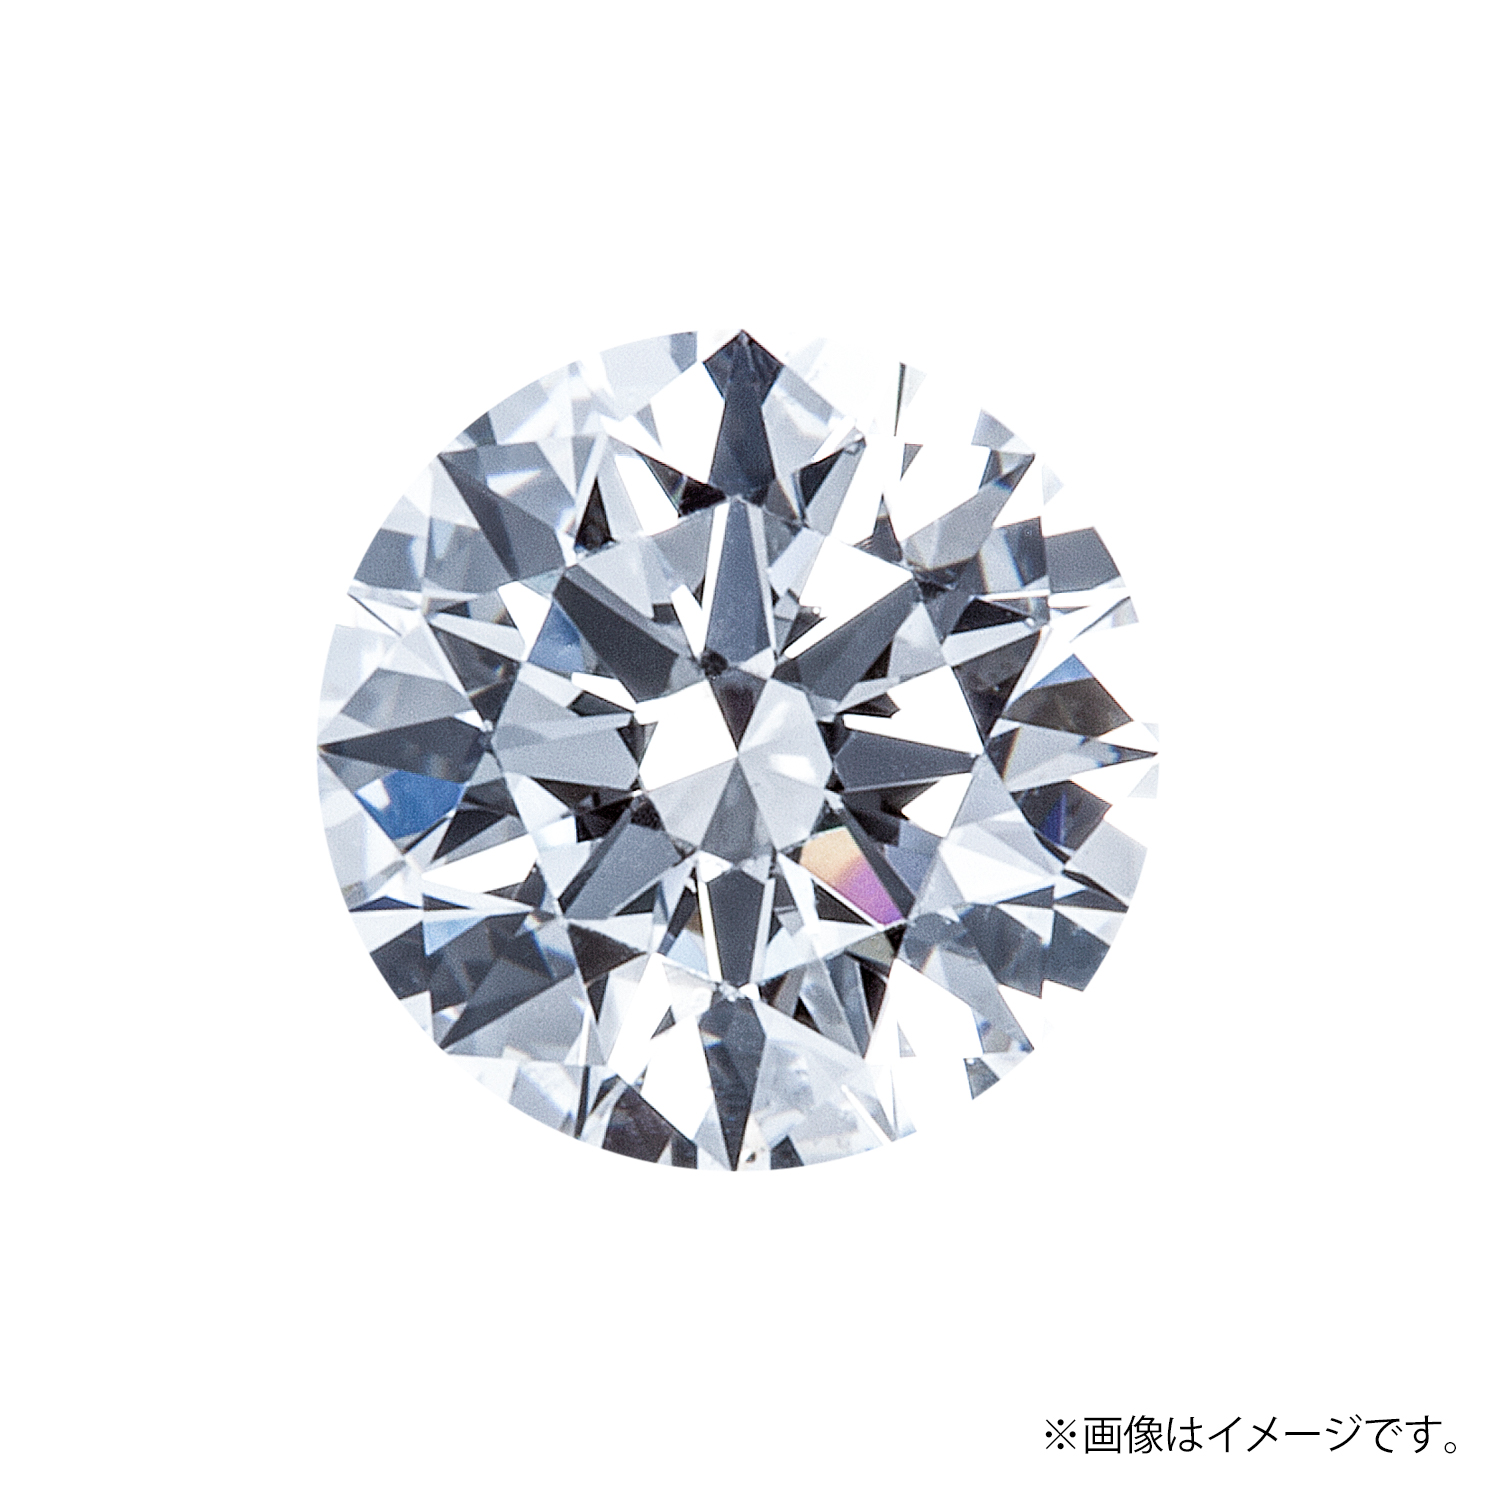 0.219ct Round ダイヤモンド / Ⅾ / IF / 3EX H&C